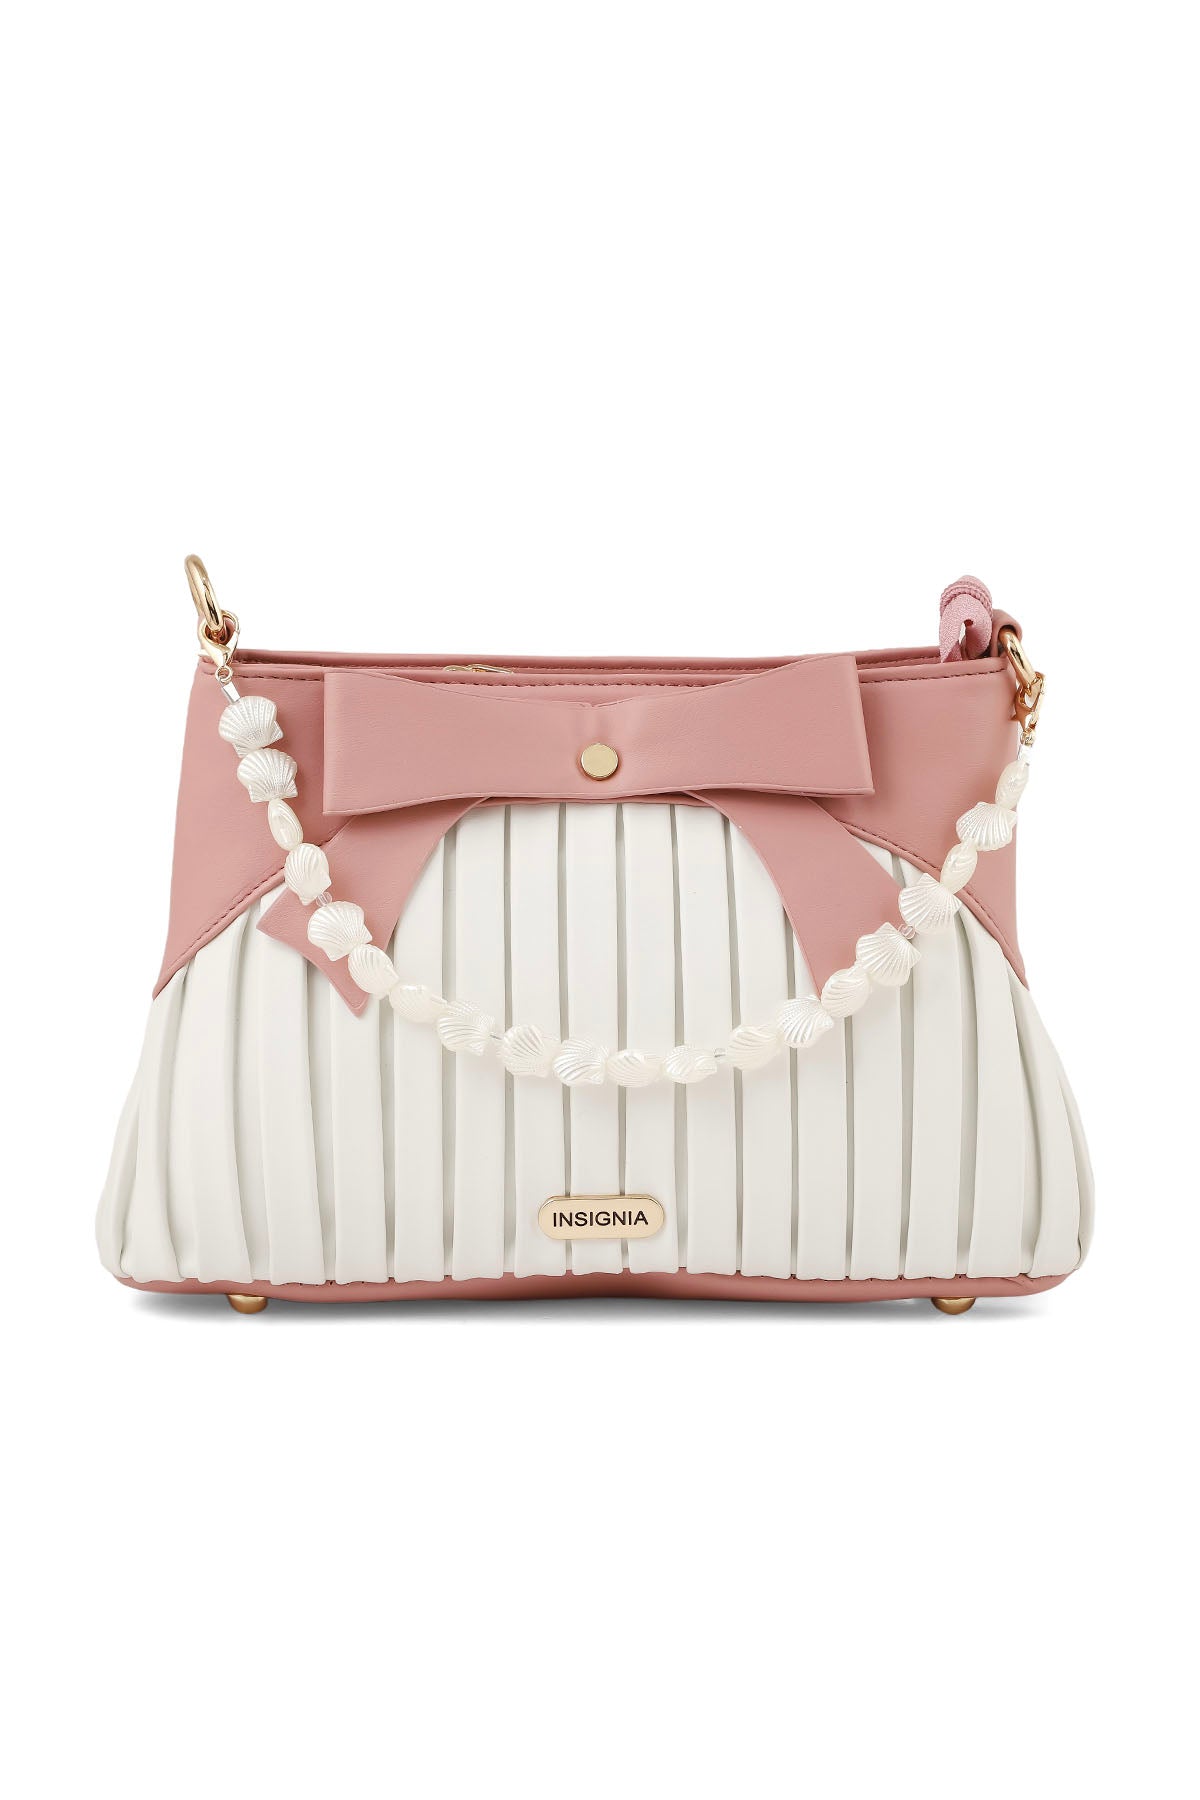 Baguette Shoulder Bags B15037-Pink